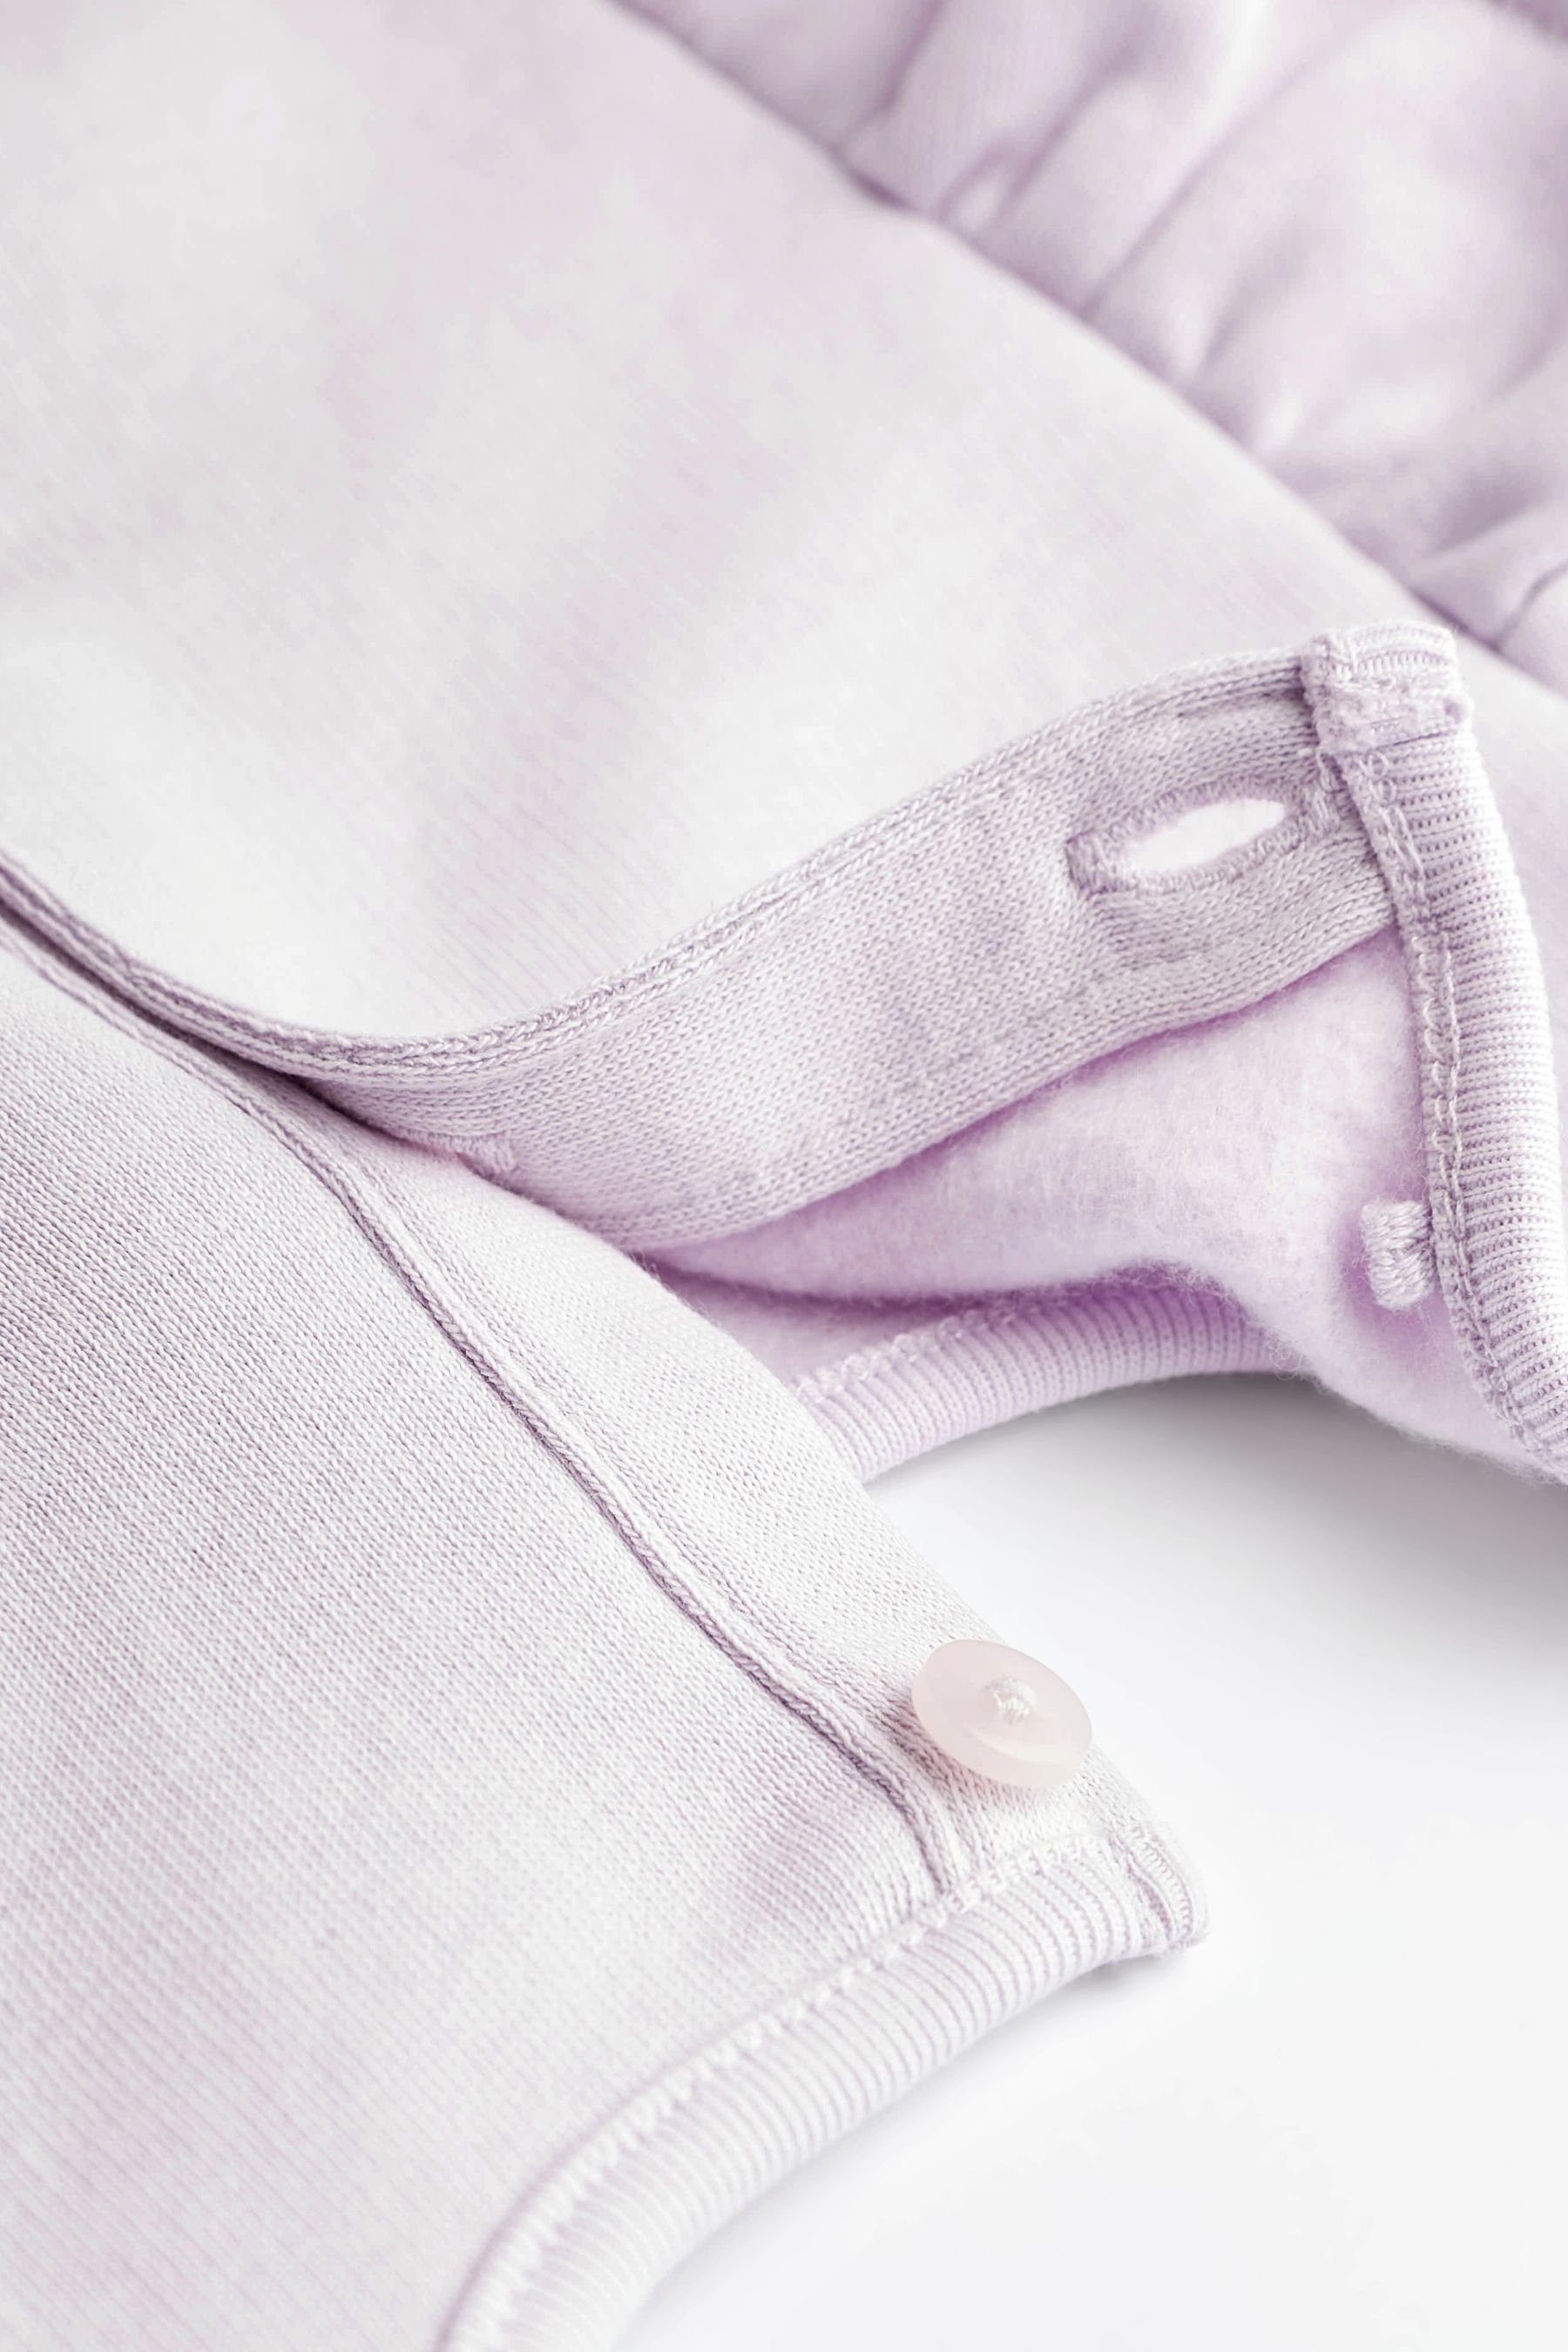 Next Shirt & Leggings Purple Lilac Pullover und (2-tlg) Baby-Set 2-teiliges mit Leggings